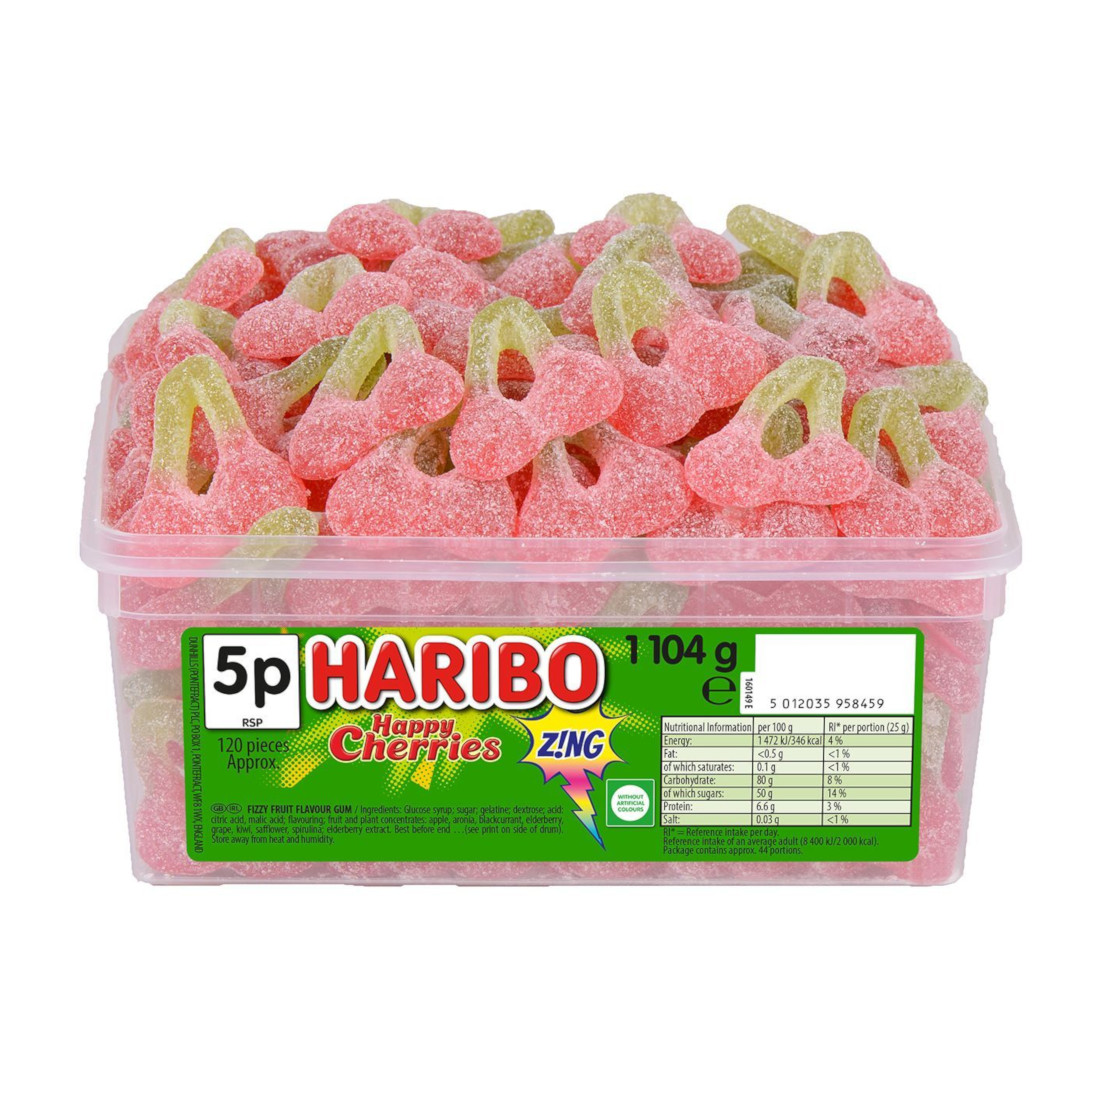 Haribo Happy Cherries Zing Tub 1104g